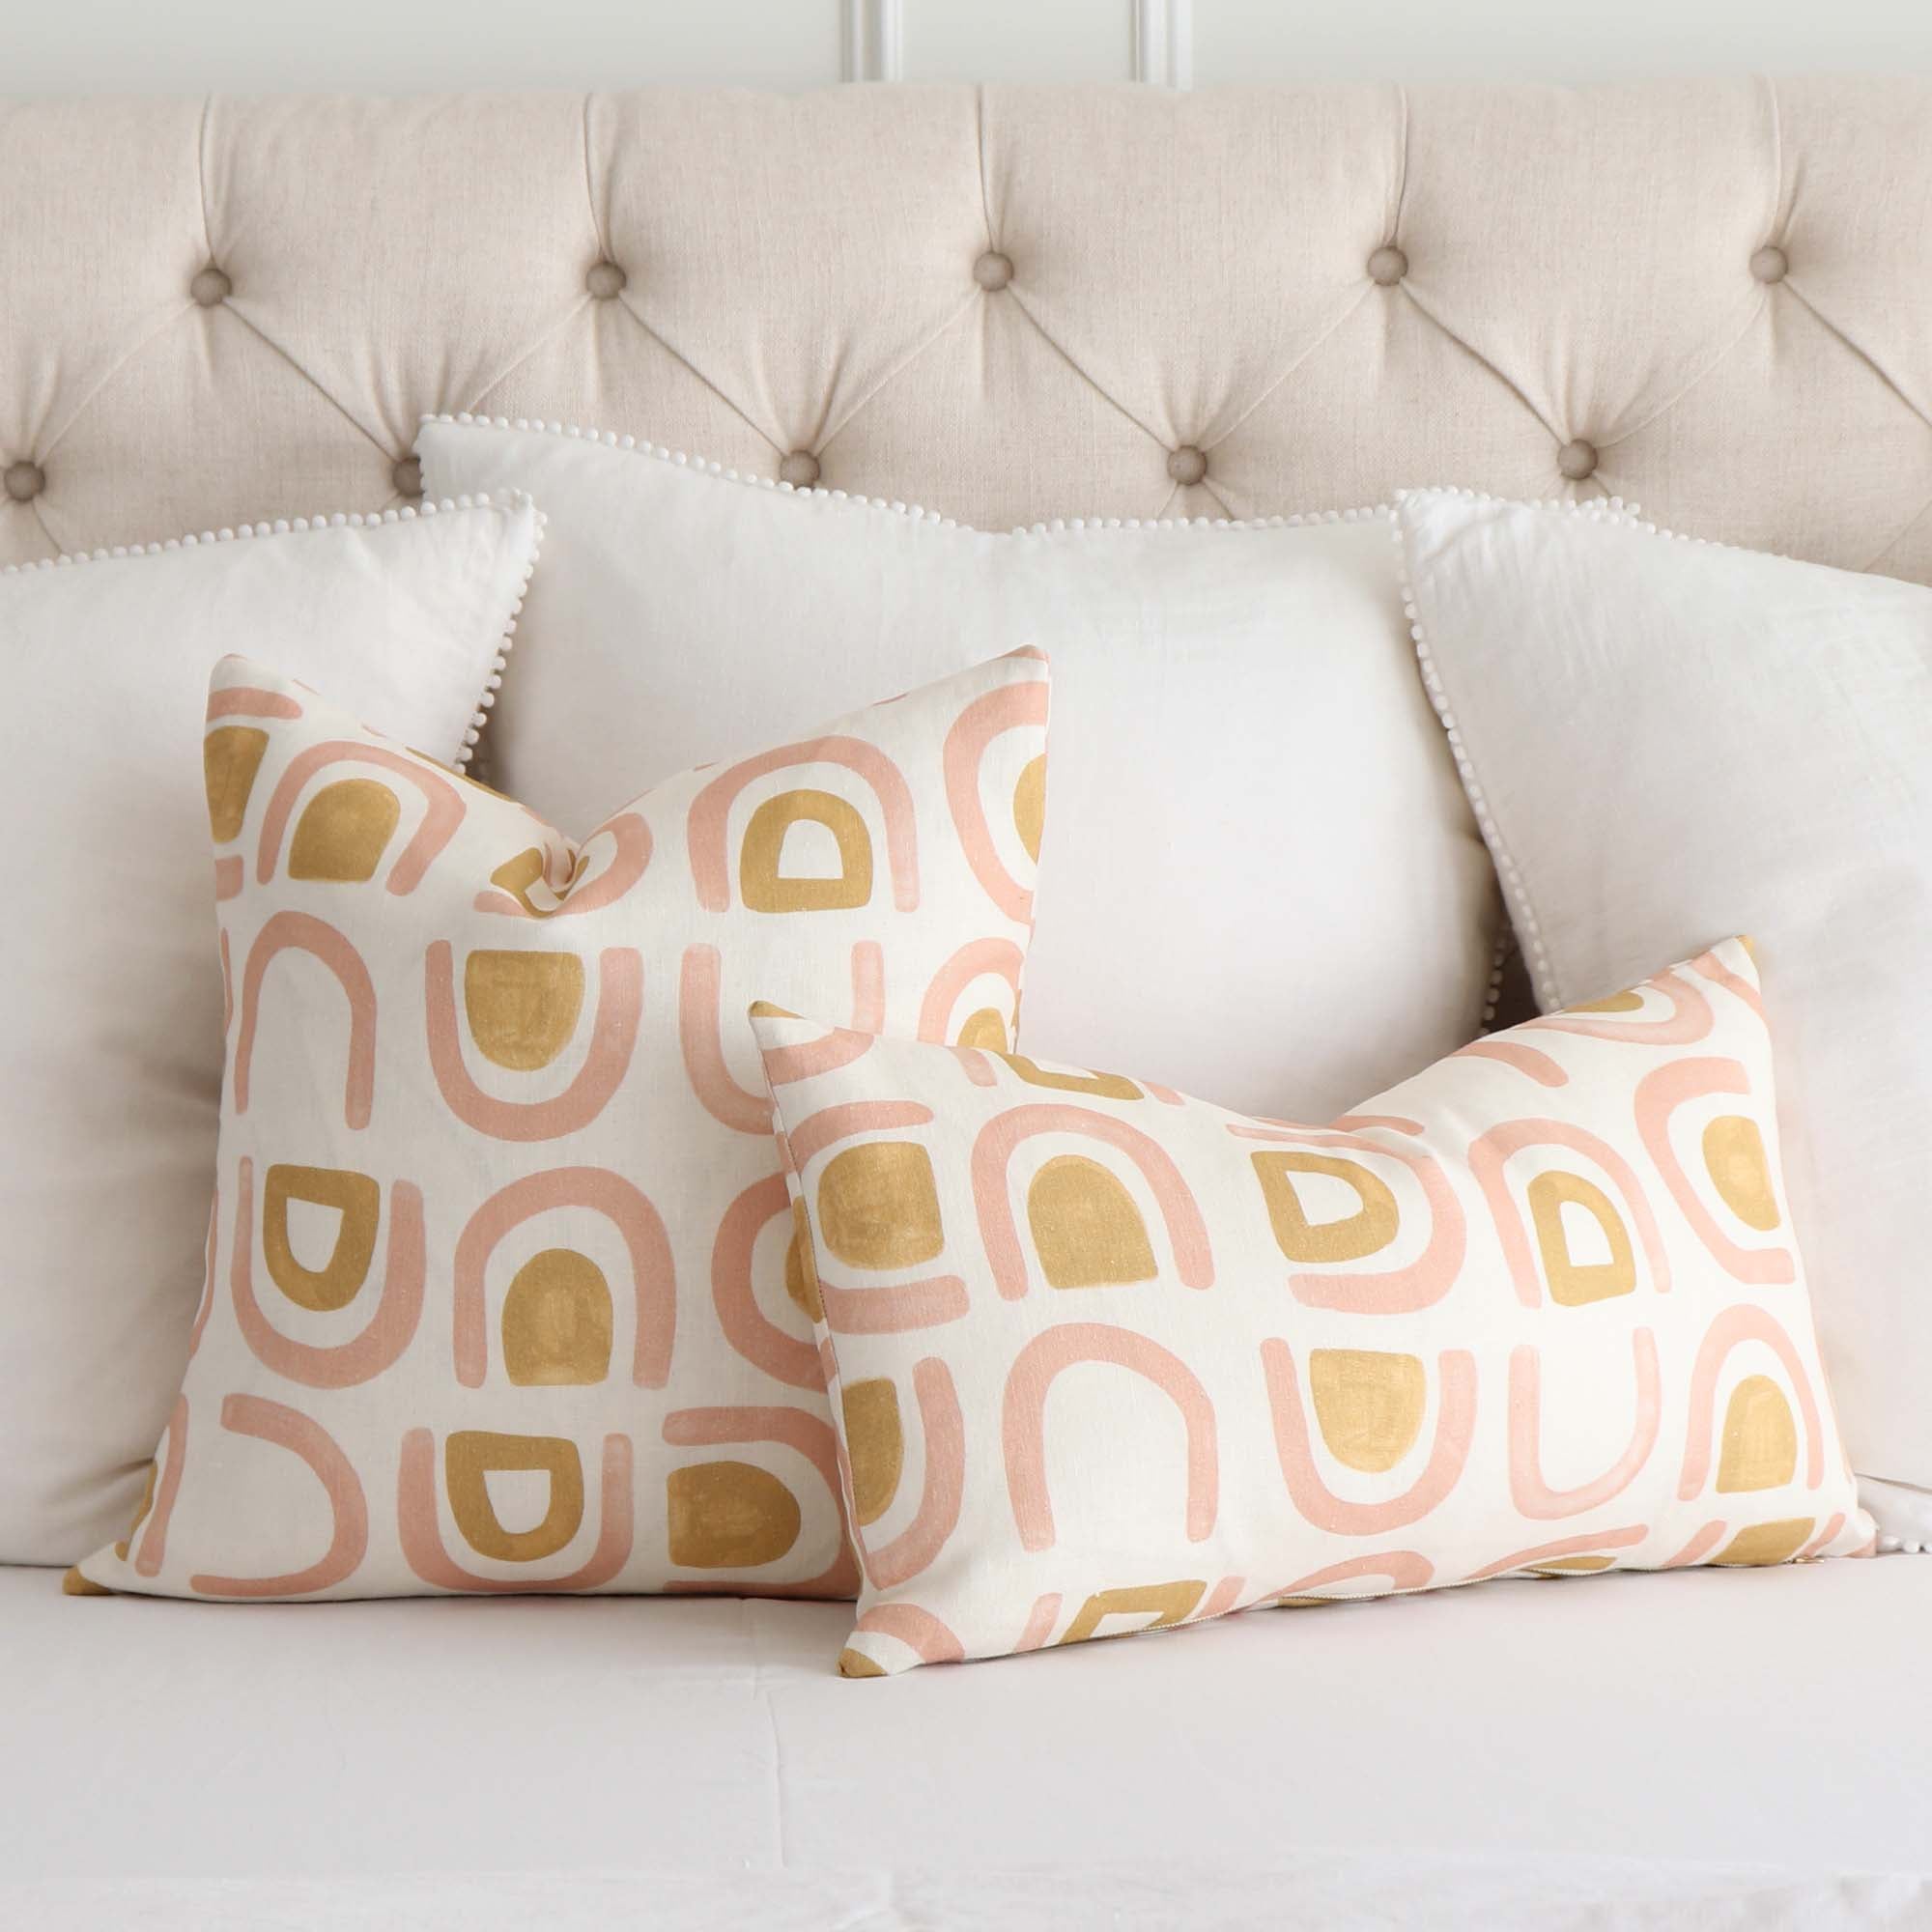 Schumacher Hidaya Williams Threshold Salt Ochre Graphic Print Linen Decorative Designer Throw Pillow Cover on Bed with Big White Euro Pillows